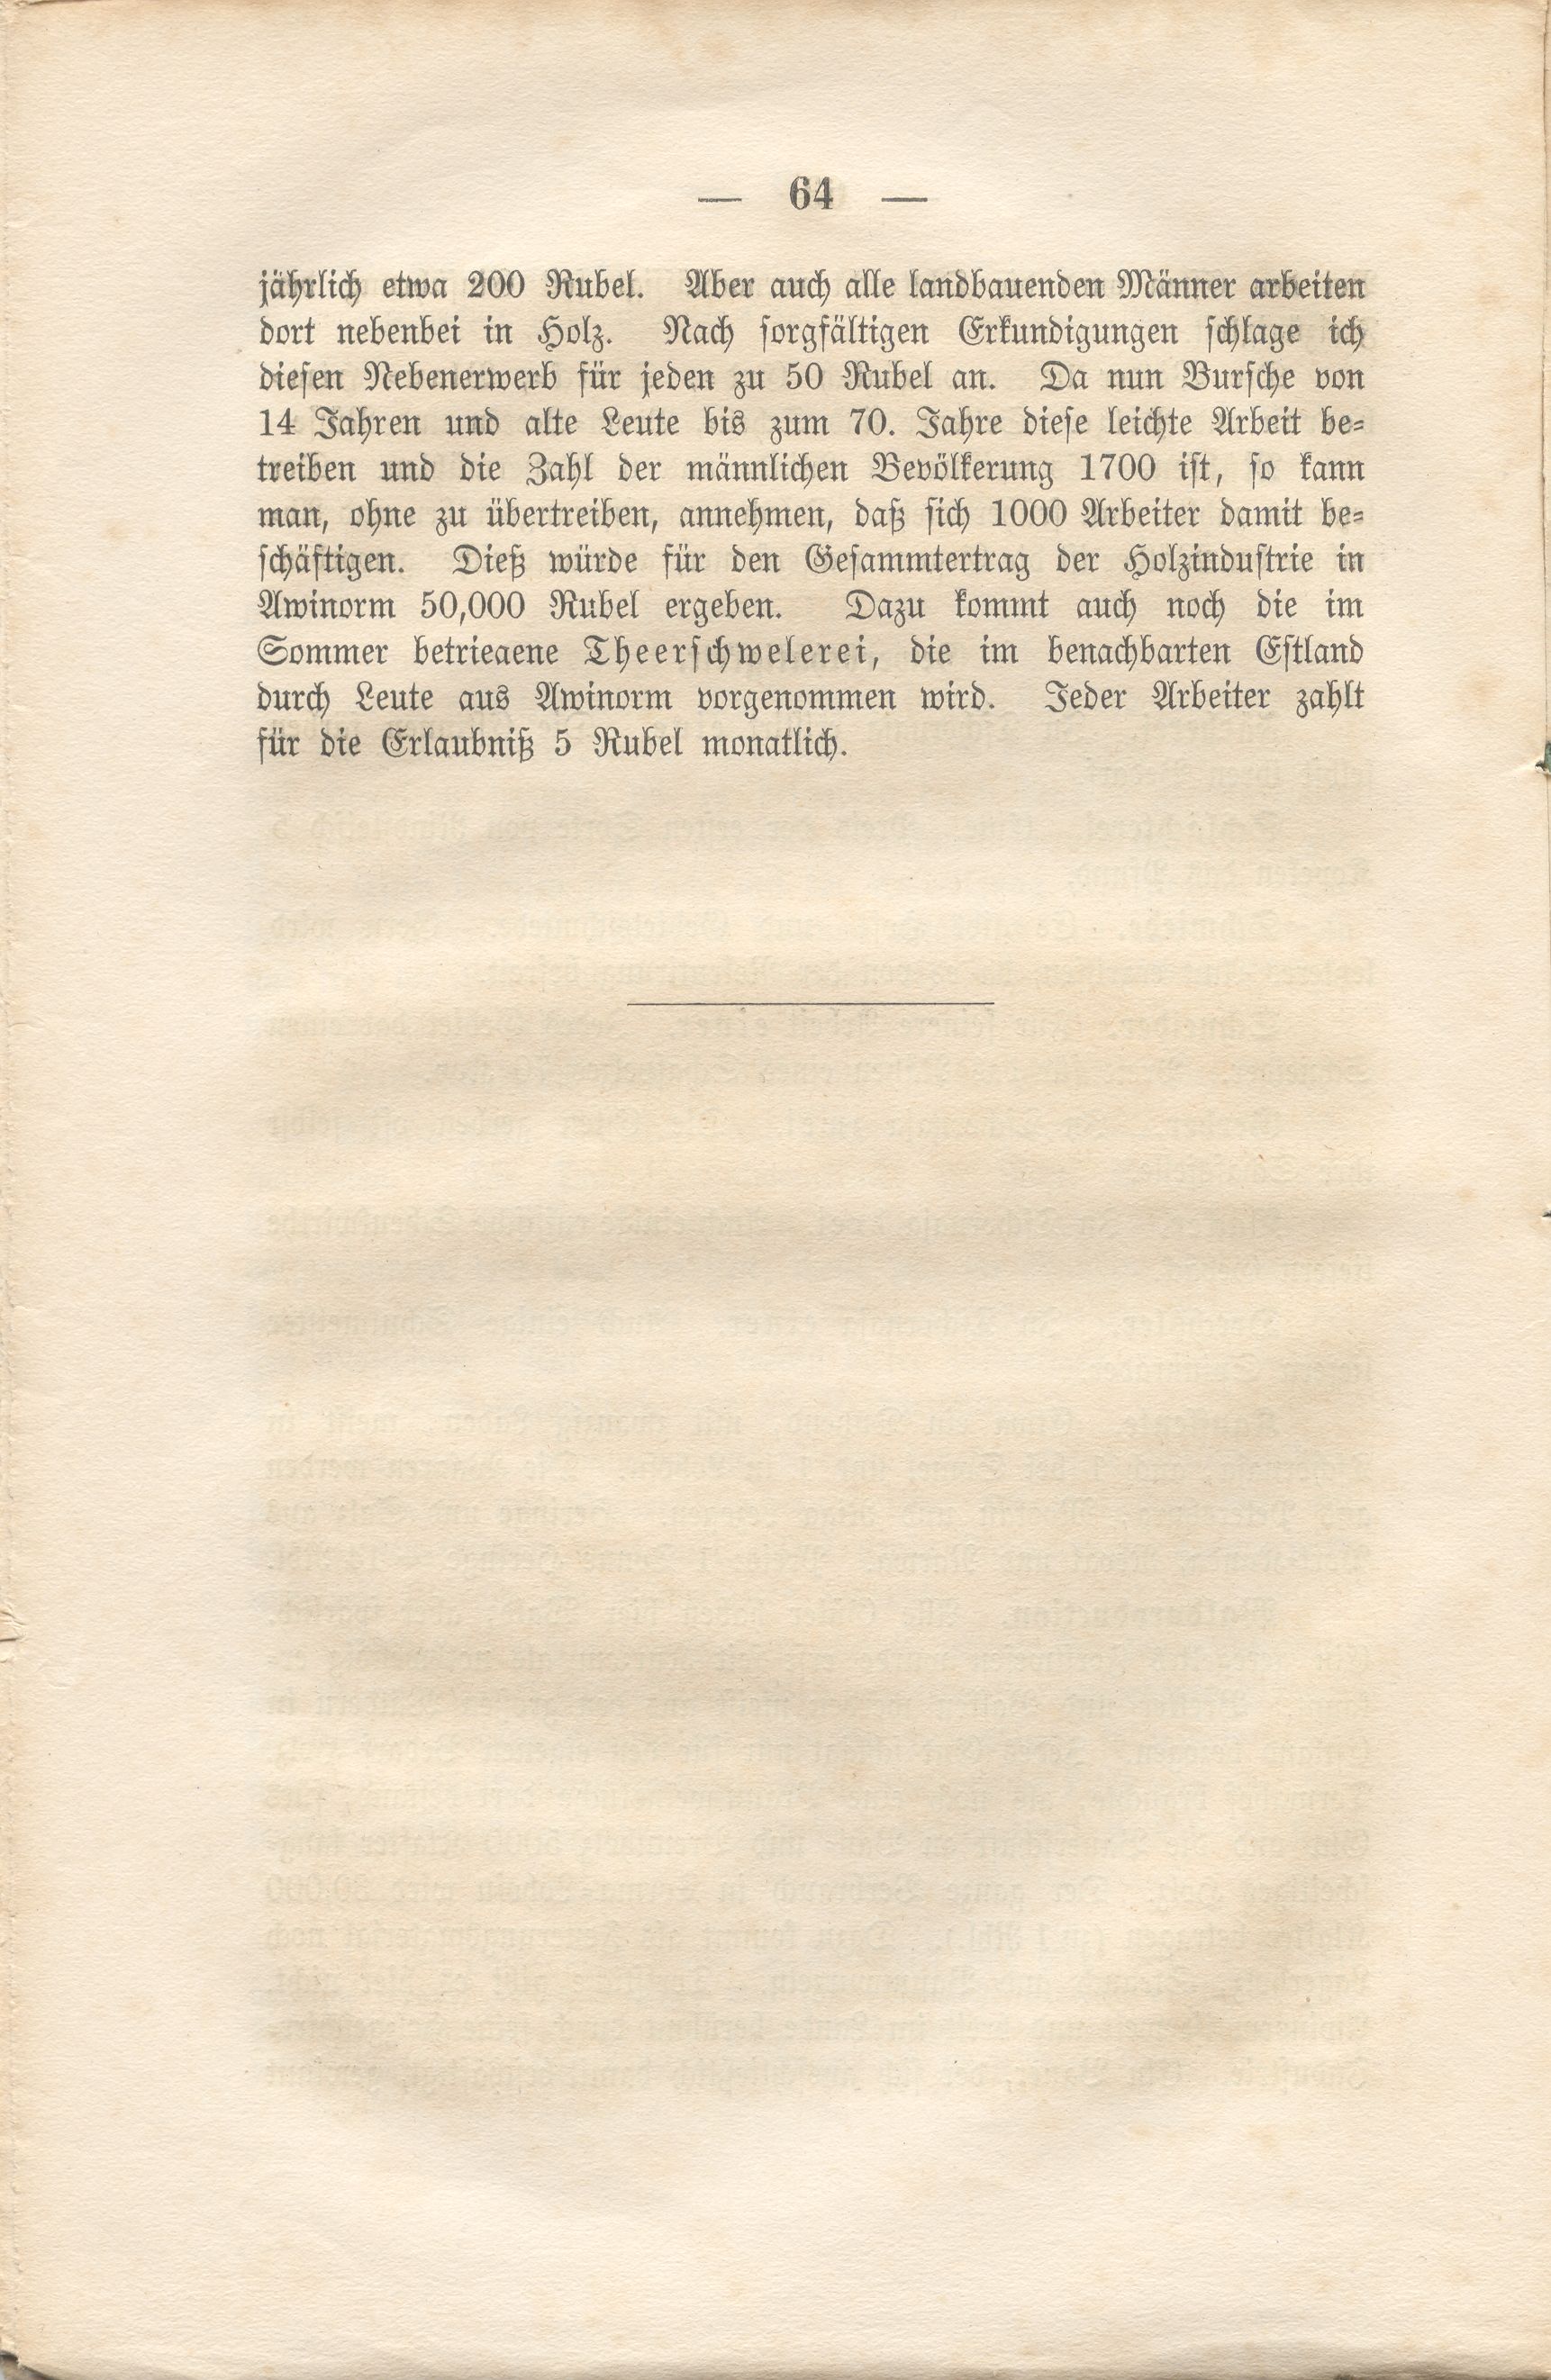 Wagien (1868) | 68. (64) Основной текст